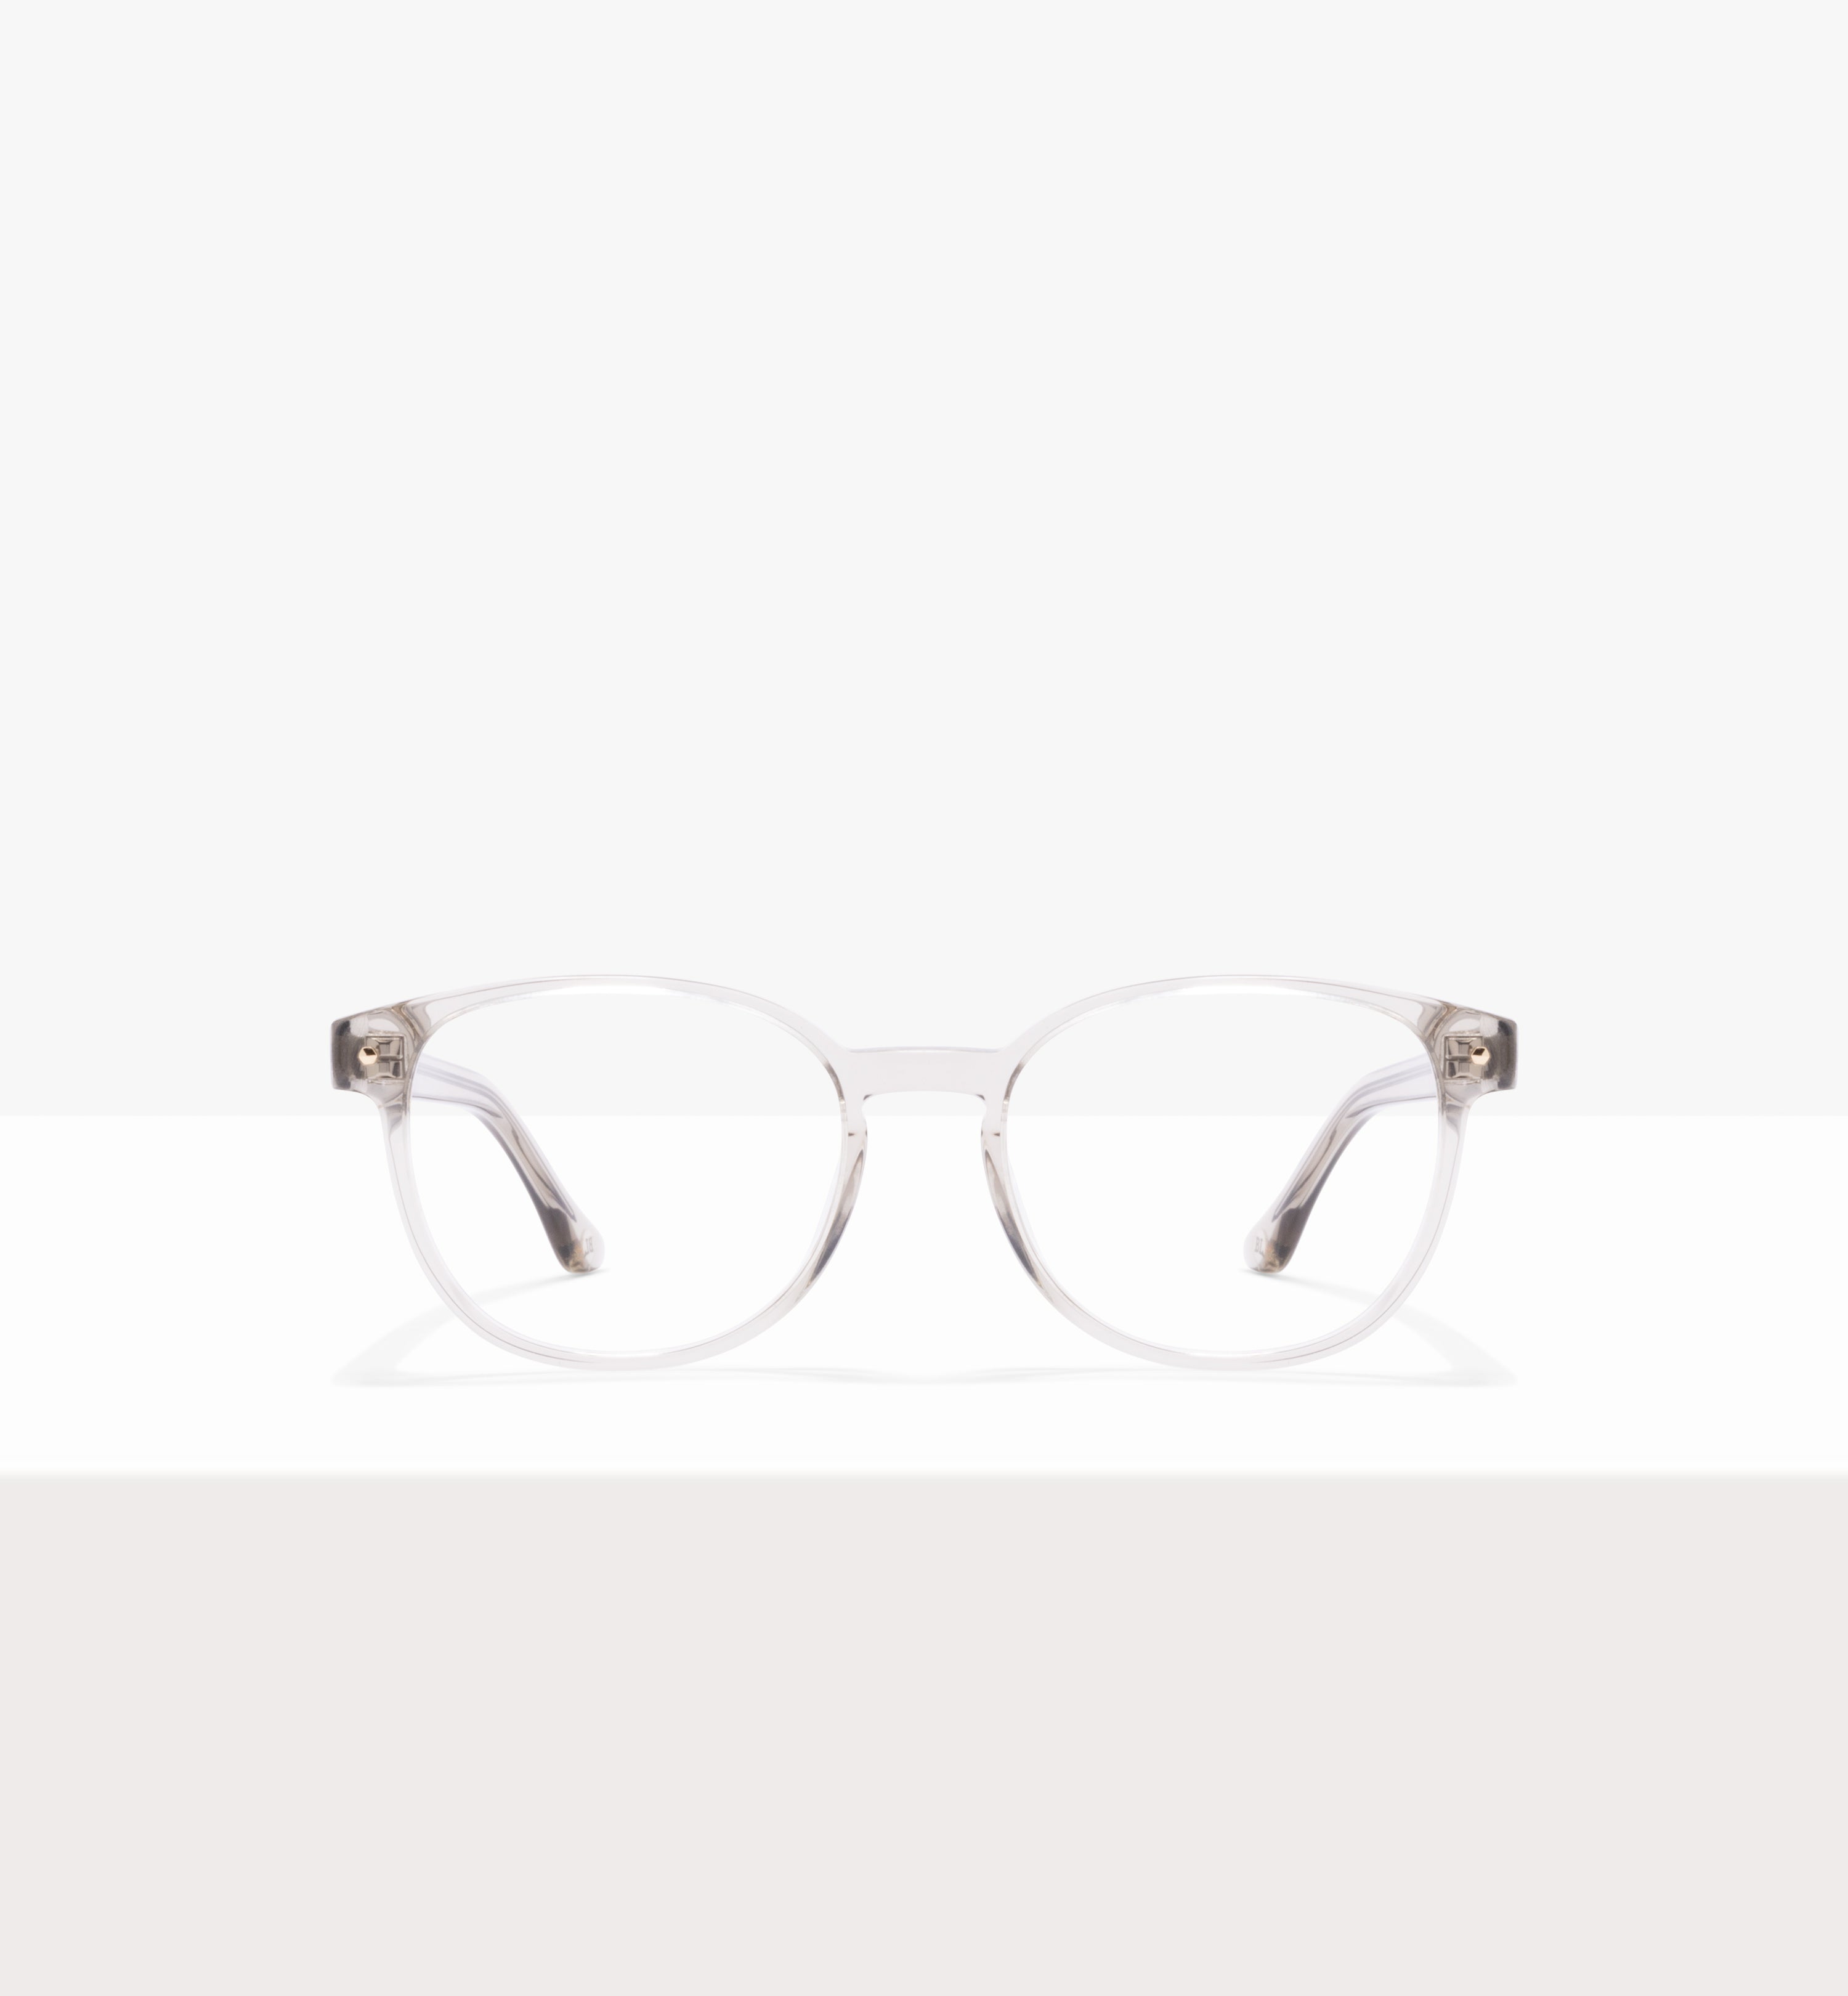 my designer sunglasses collection 😎 #designersunglasses #sunglasses #... |  celine sunglass | TikTok